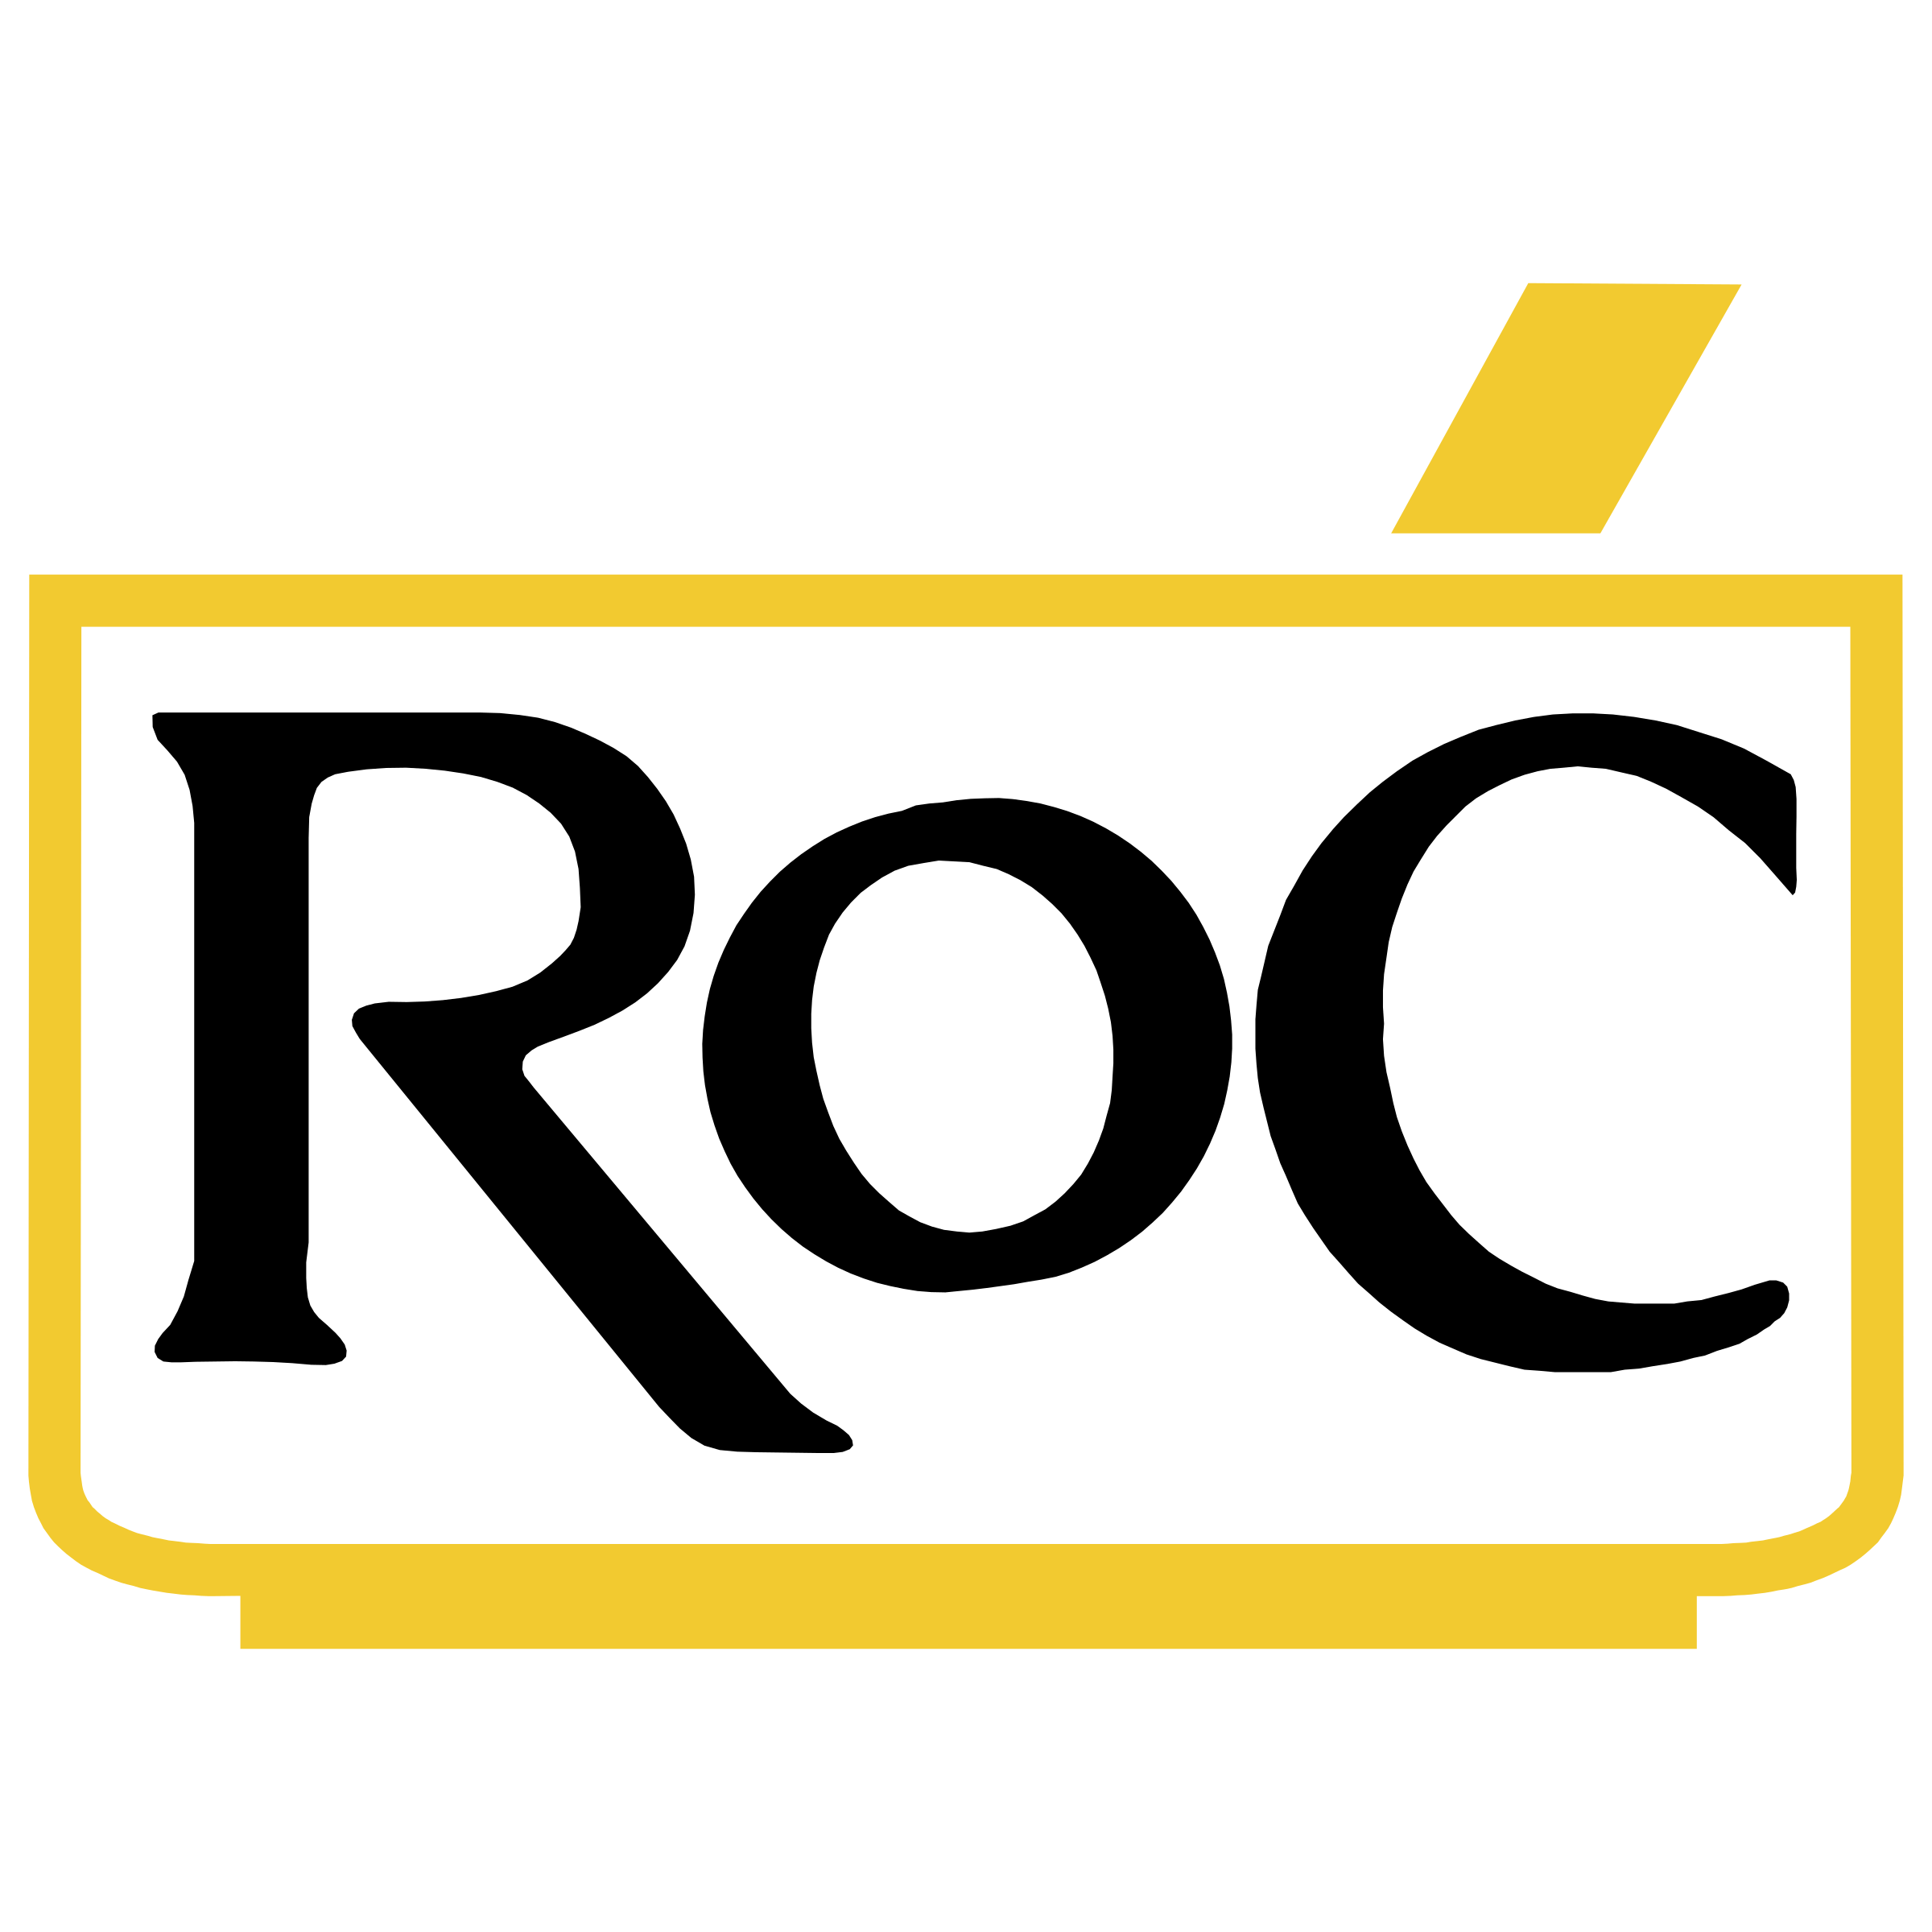 Roc Logo - Roc Logo PNG Transparent & SVG Vector - Freebie Supply